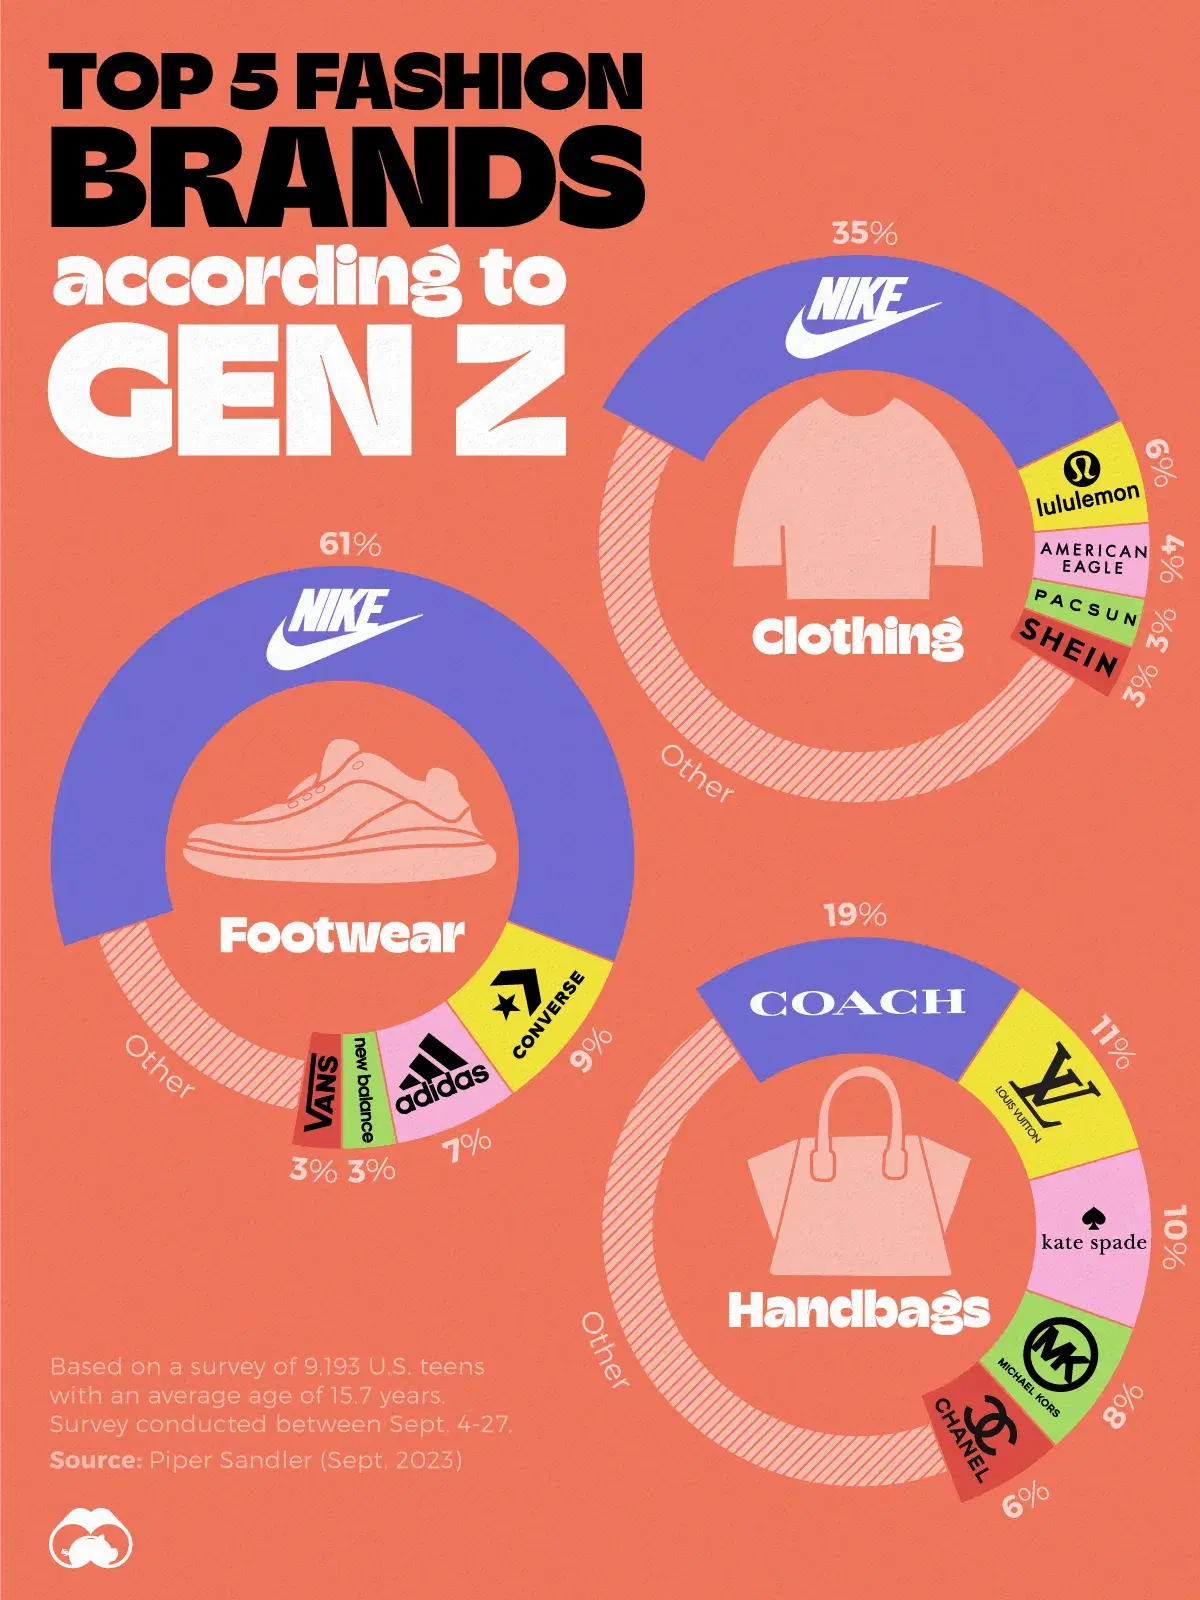 Nike Is the Top Apparel and Footwear Brand Among U.S. Teens